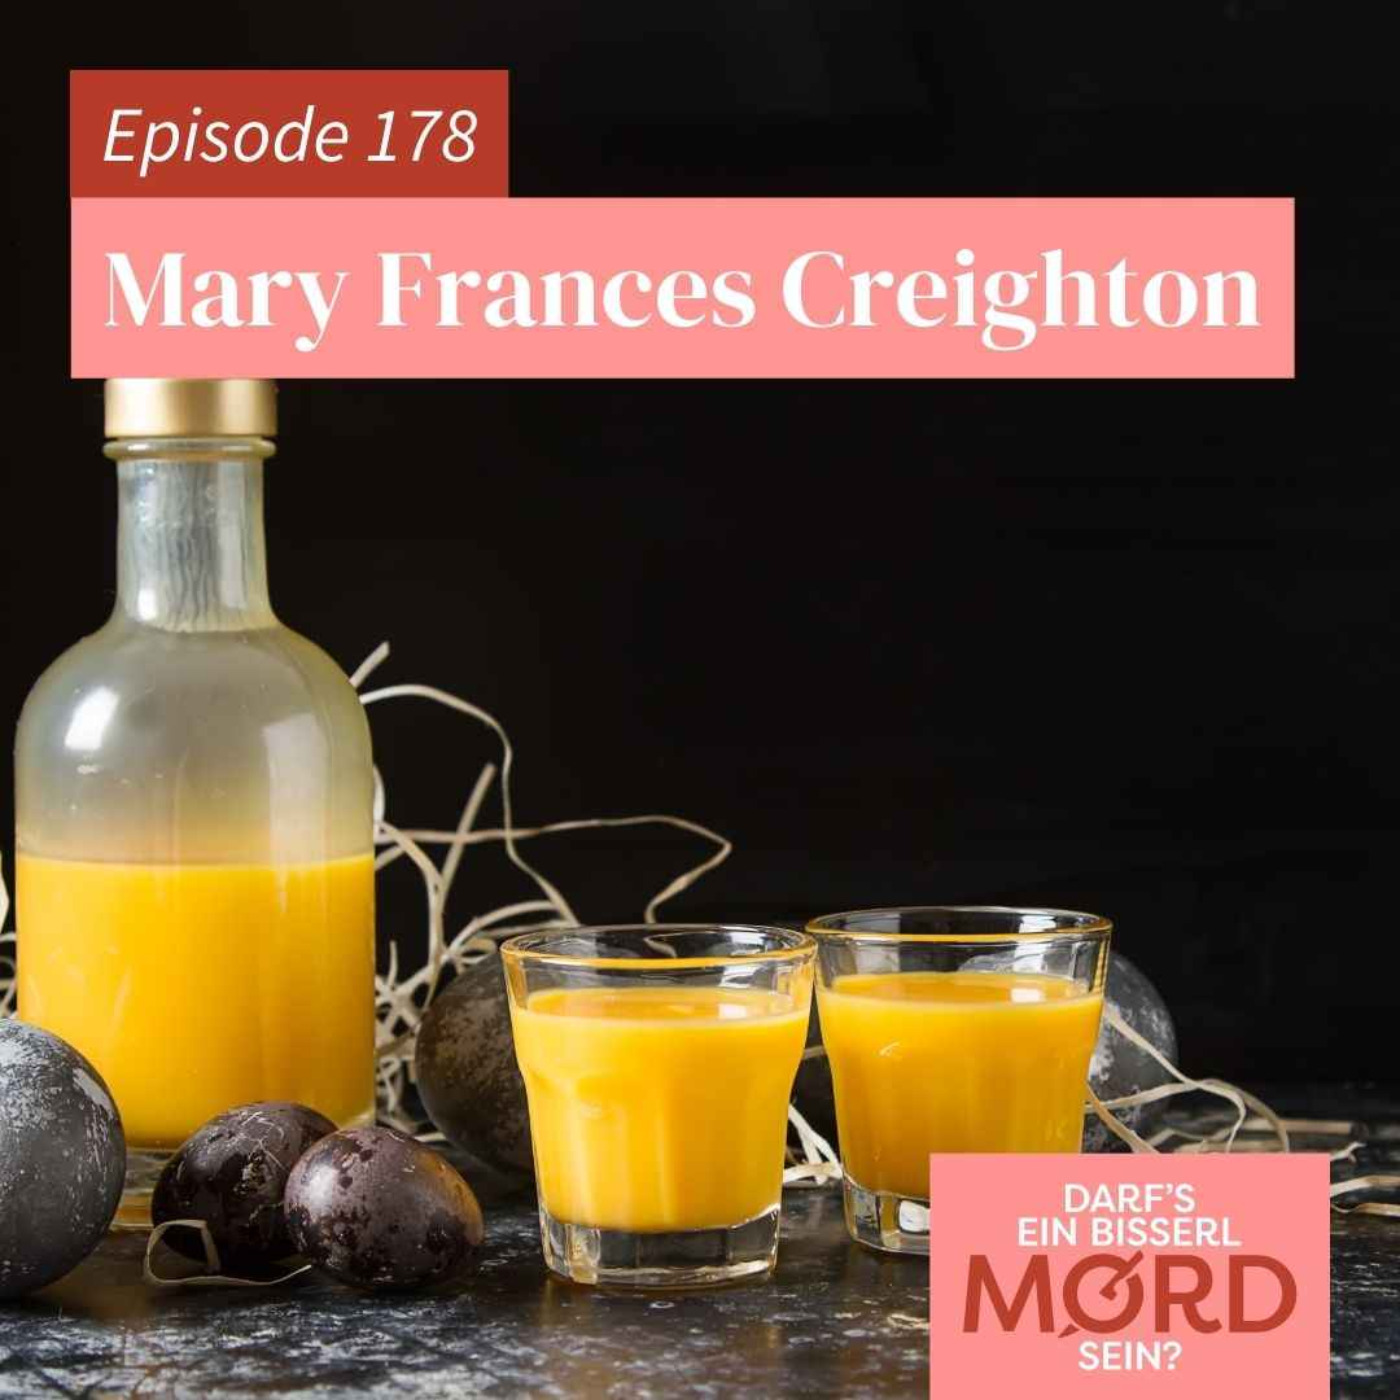 Episode 178: Mary Frances Creighton